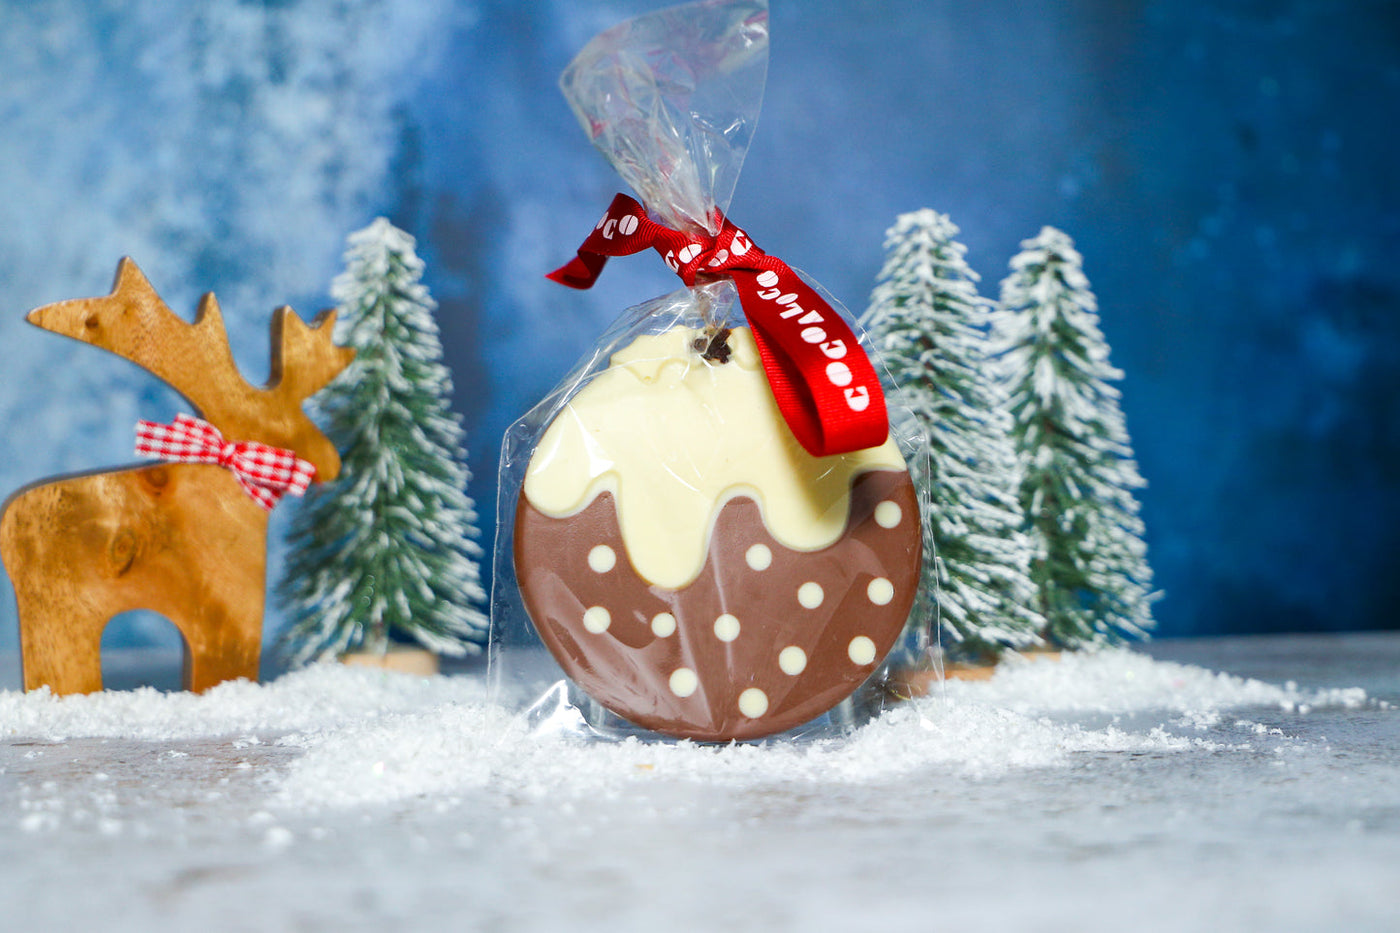 Cocoa Loco - Milk & White Chocolate Christmas Pudding